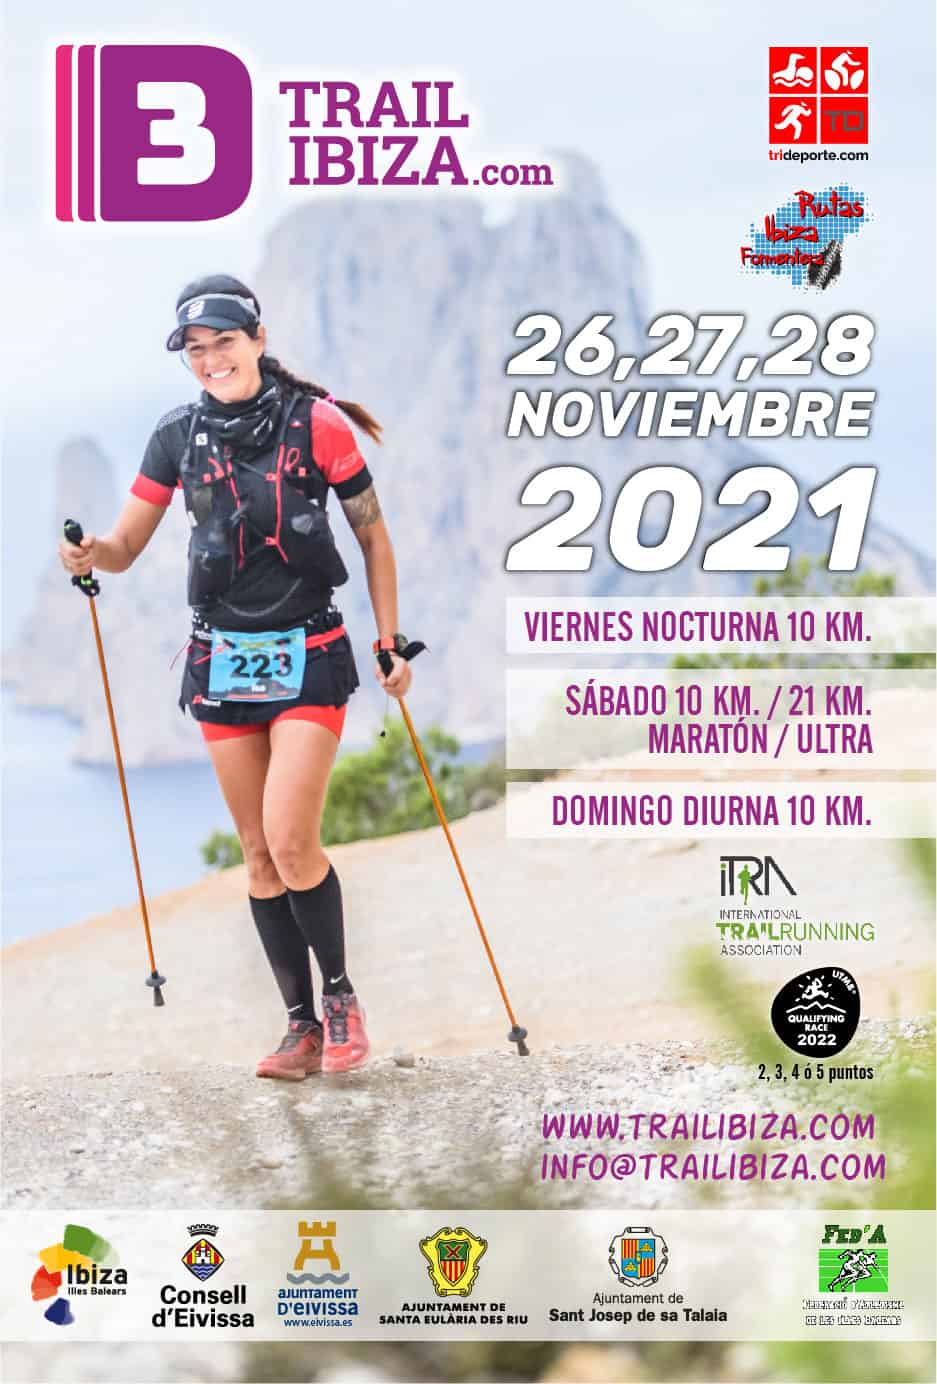 3-jours-trail-ibiza-2021-welcometoibiza